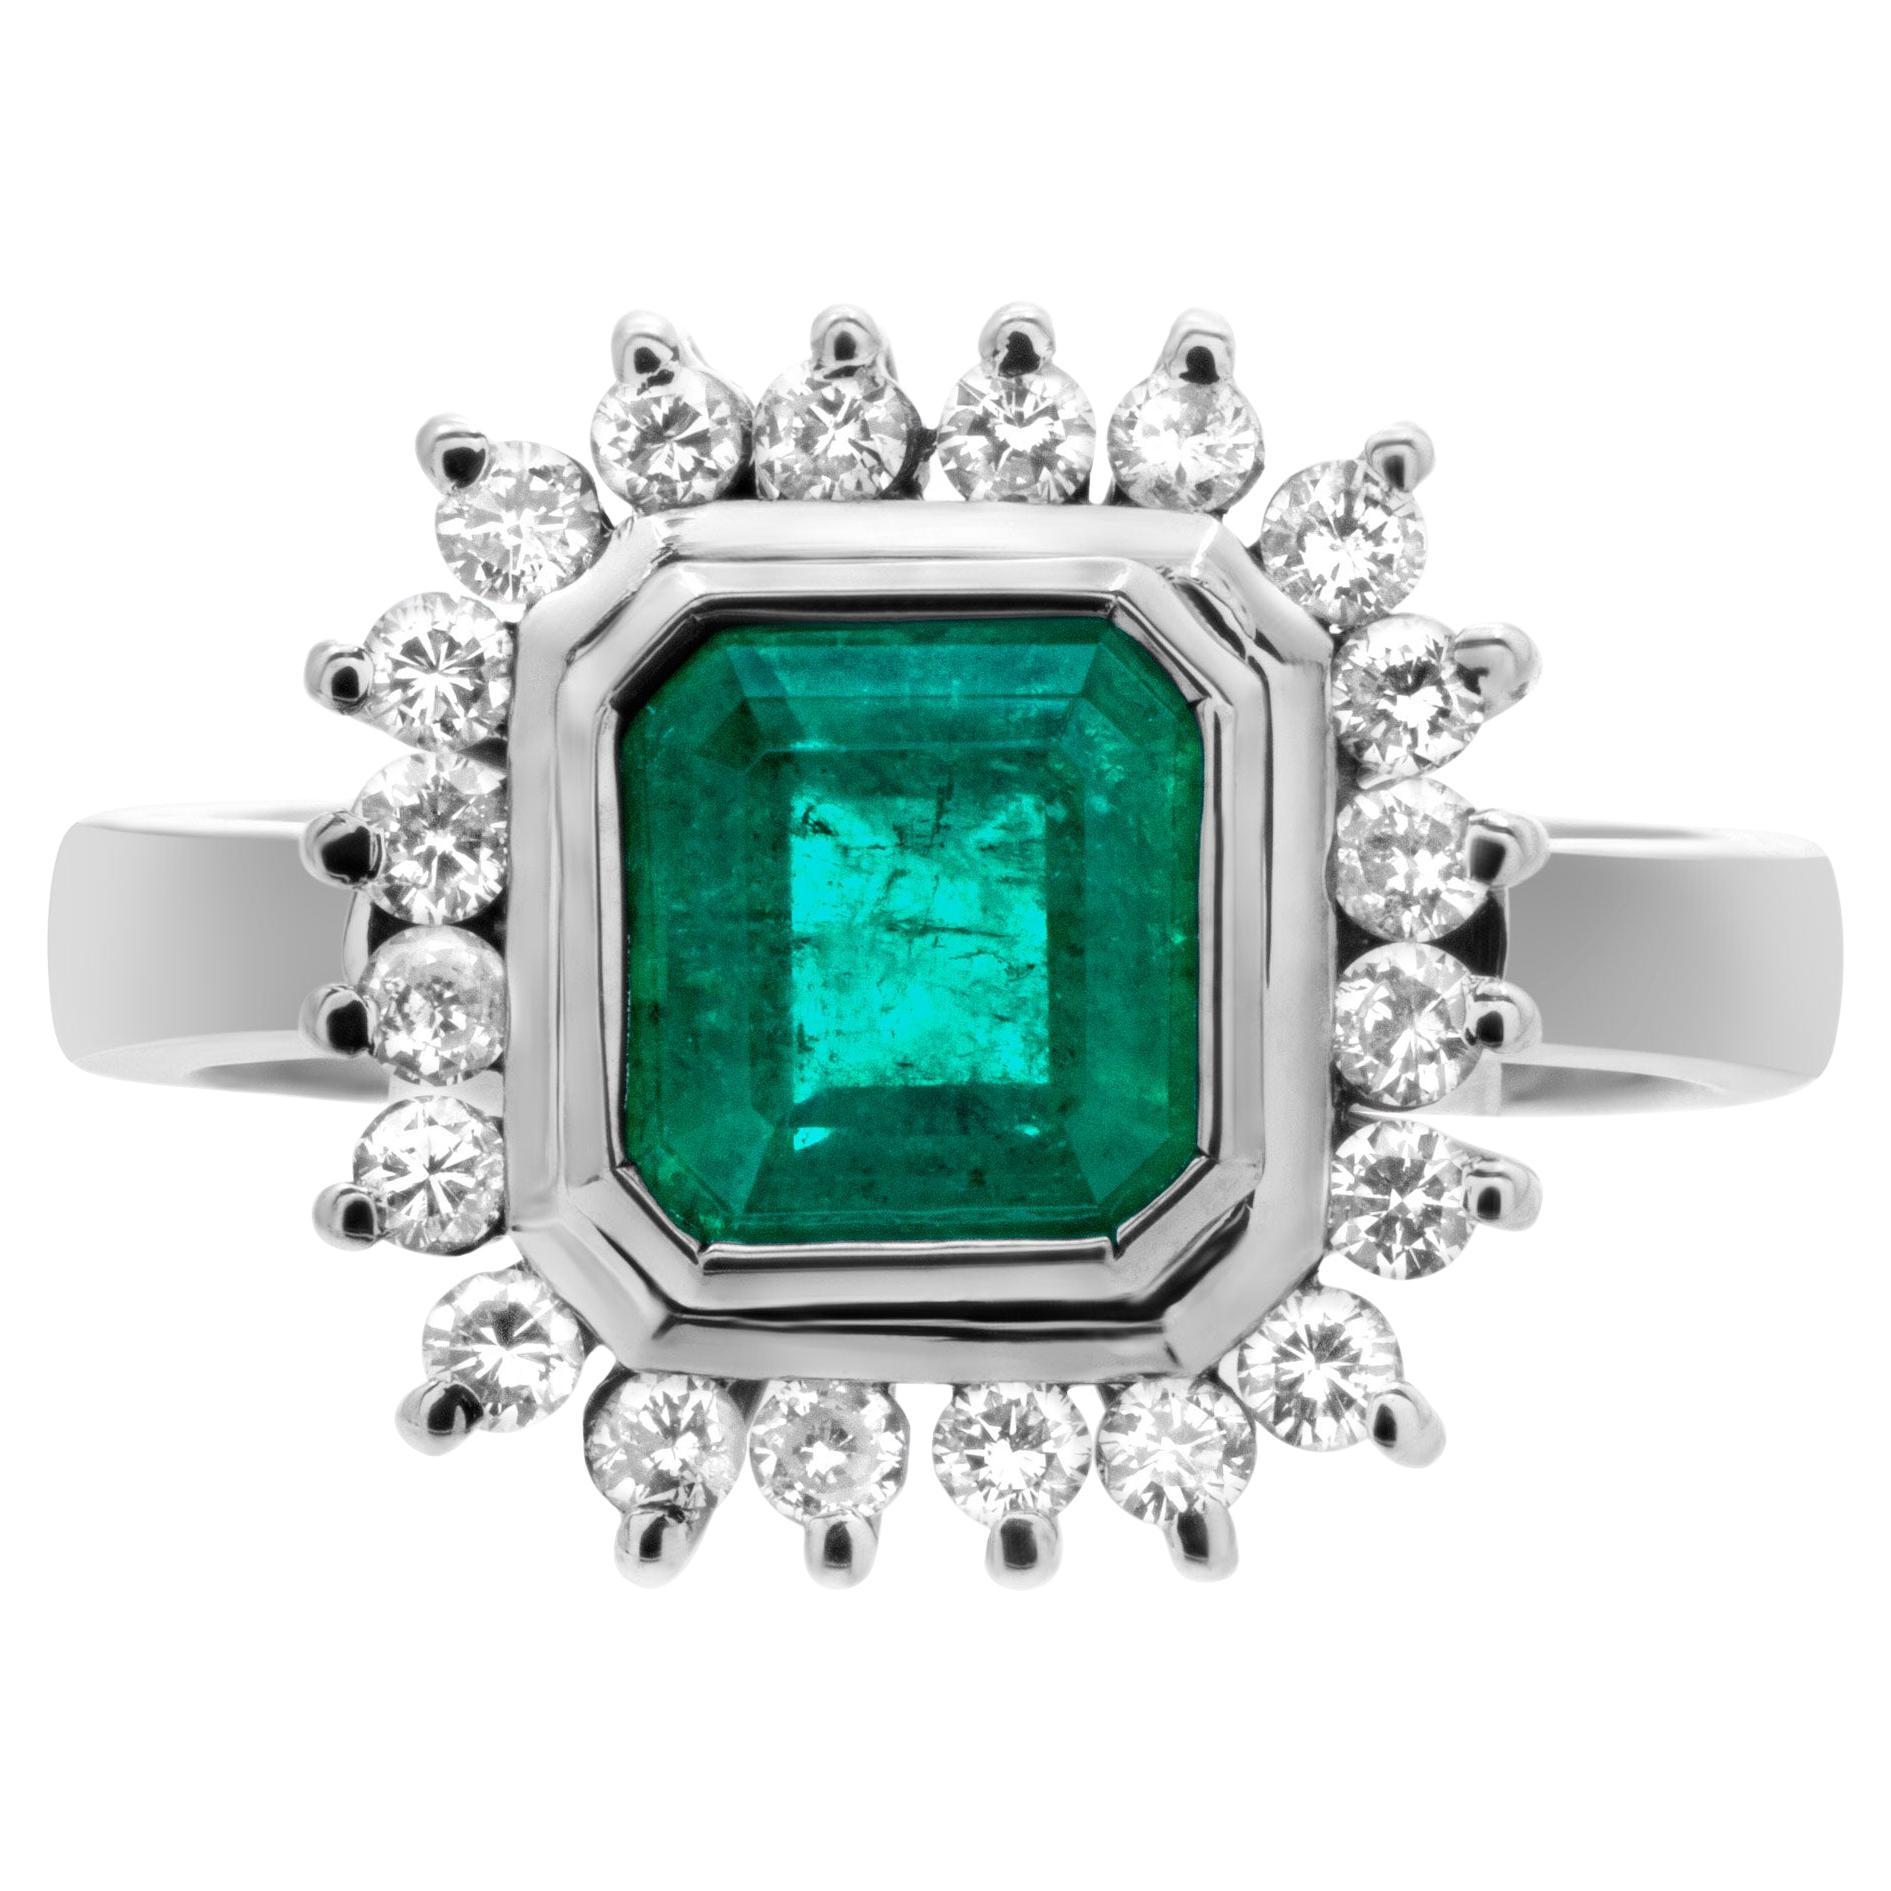 Elegant Emerald and Diamond Ring Set in 18k White Gold